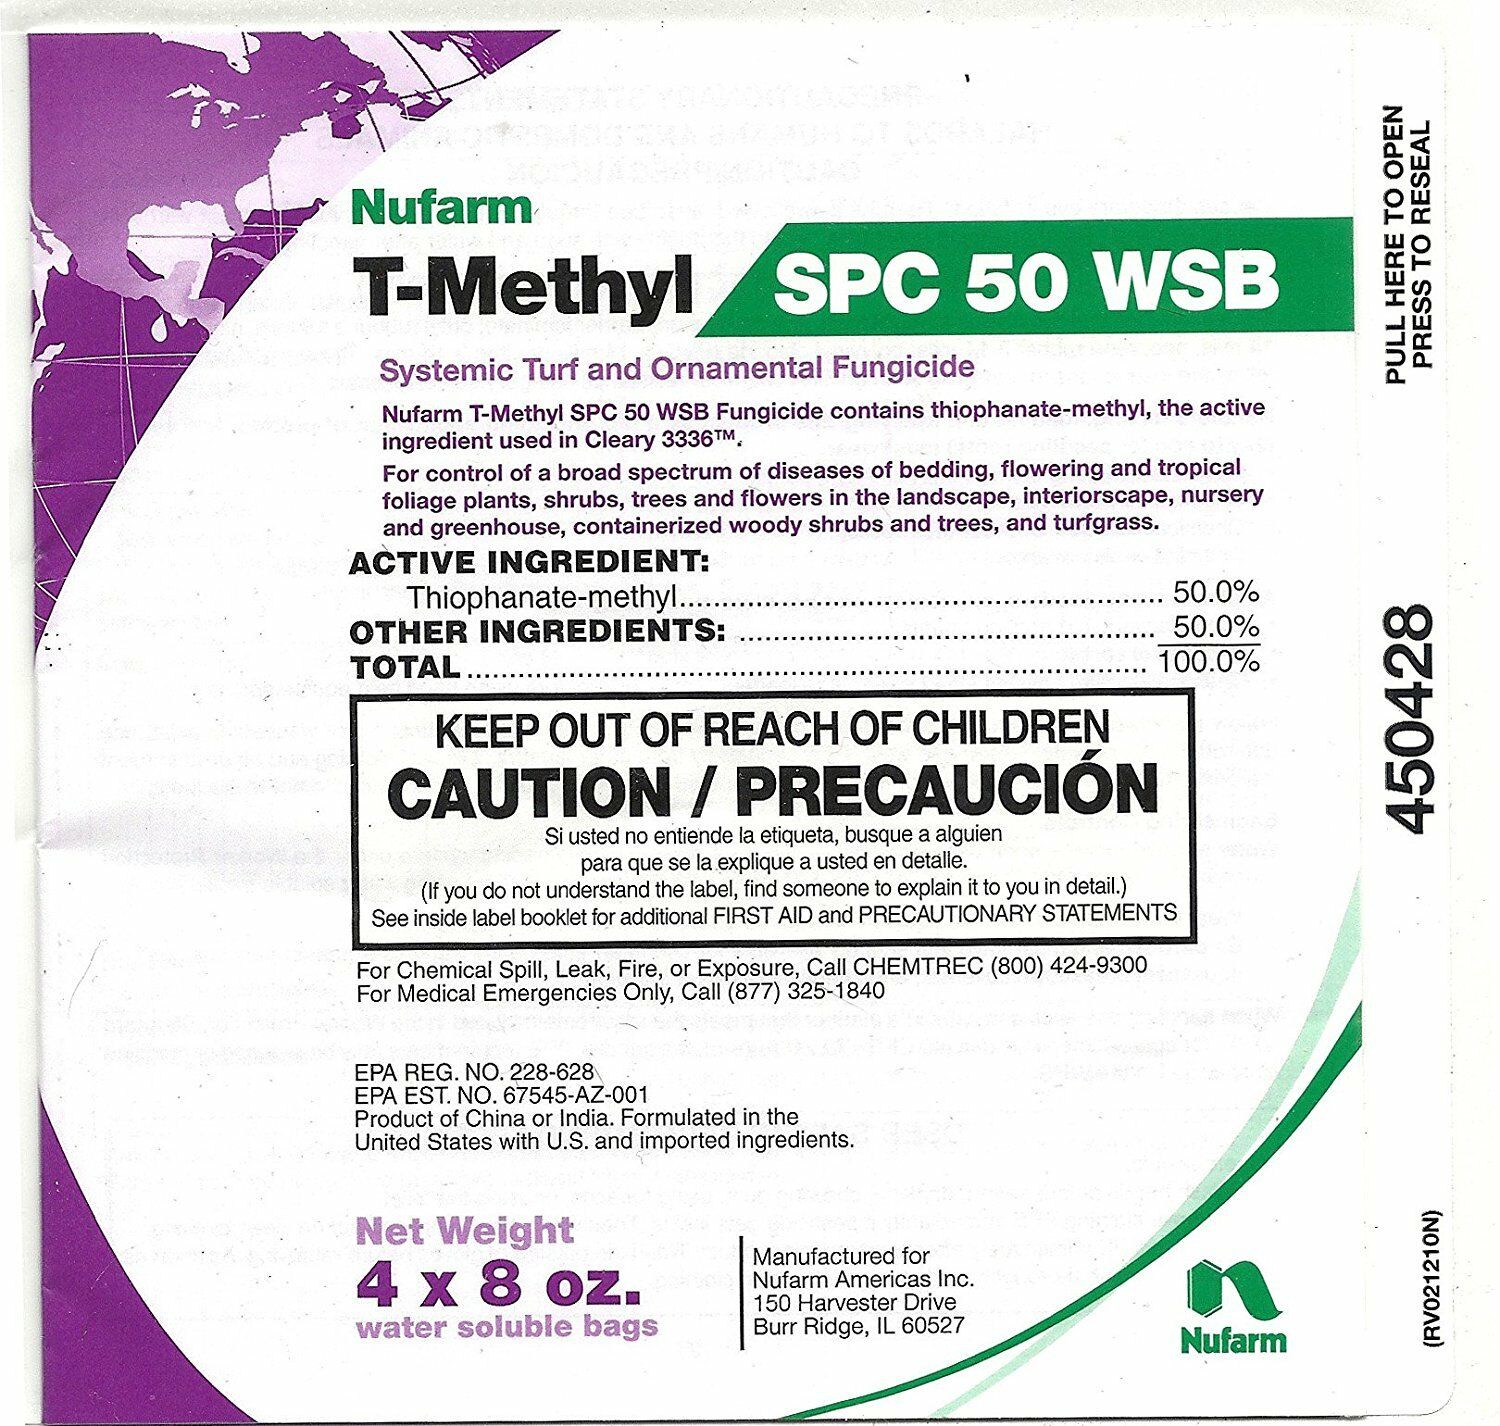 C-T-Methyl E-Pro 50 WSB (4 x 8oz) 2 lb bag 6/cs - Chemicals